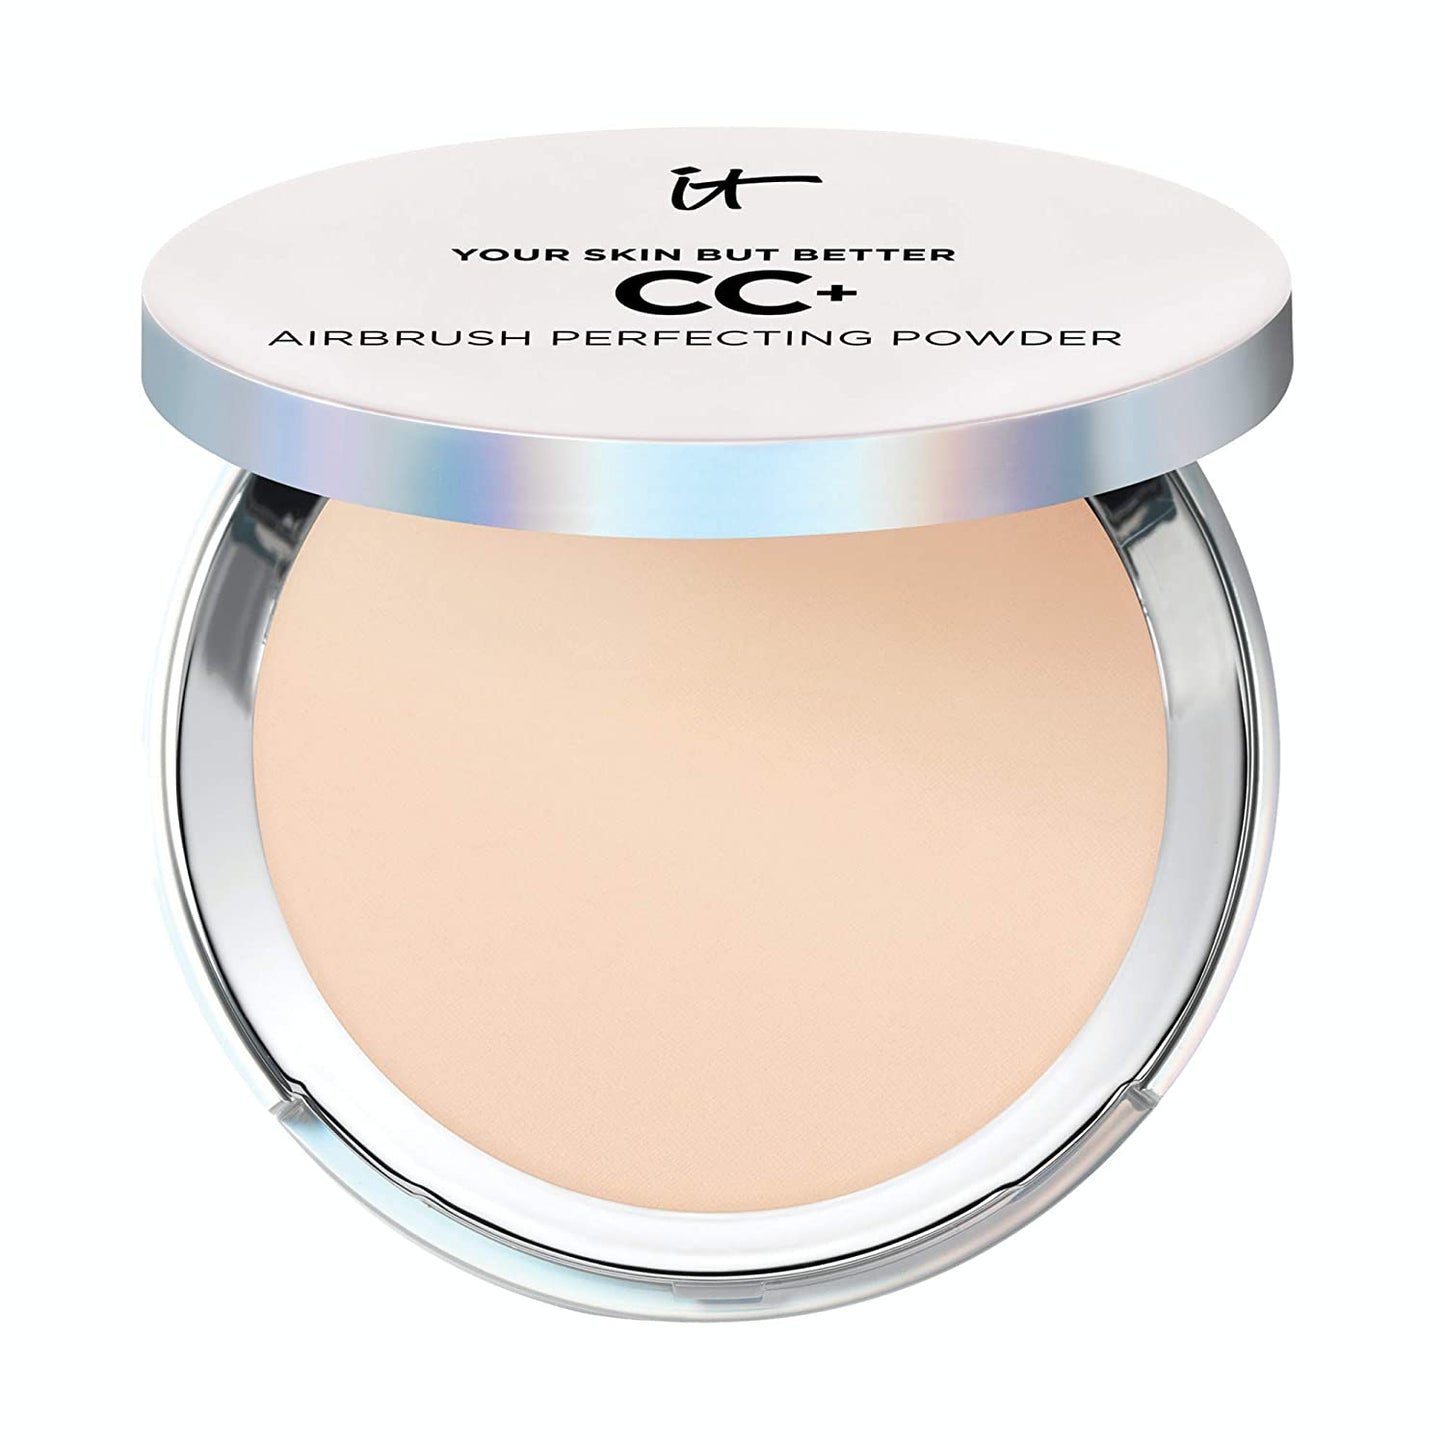 POLVO CC LIGHT - IT COSMETICS - Adrissa Beauty - Maquillaje